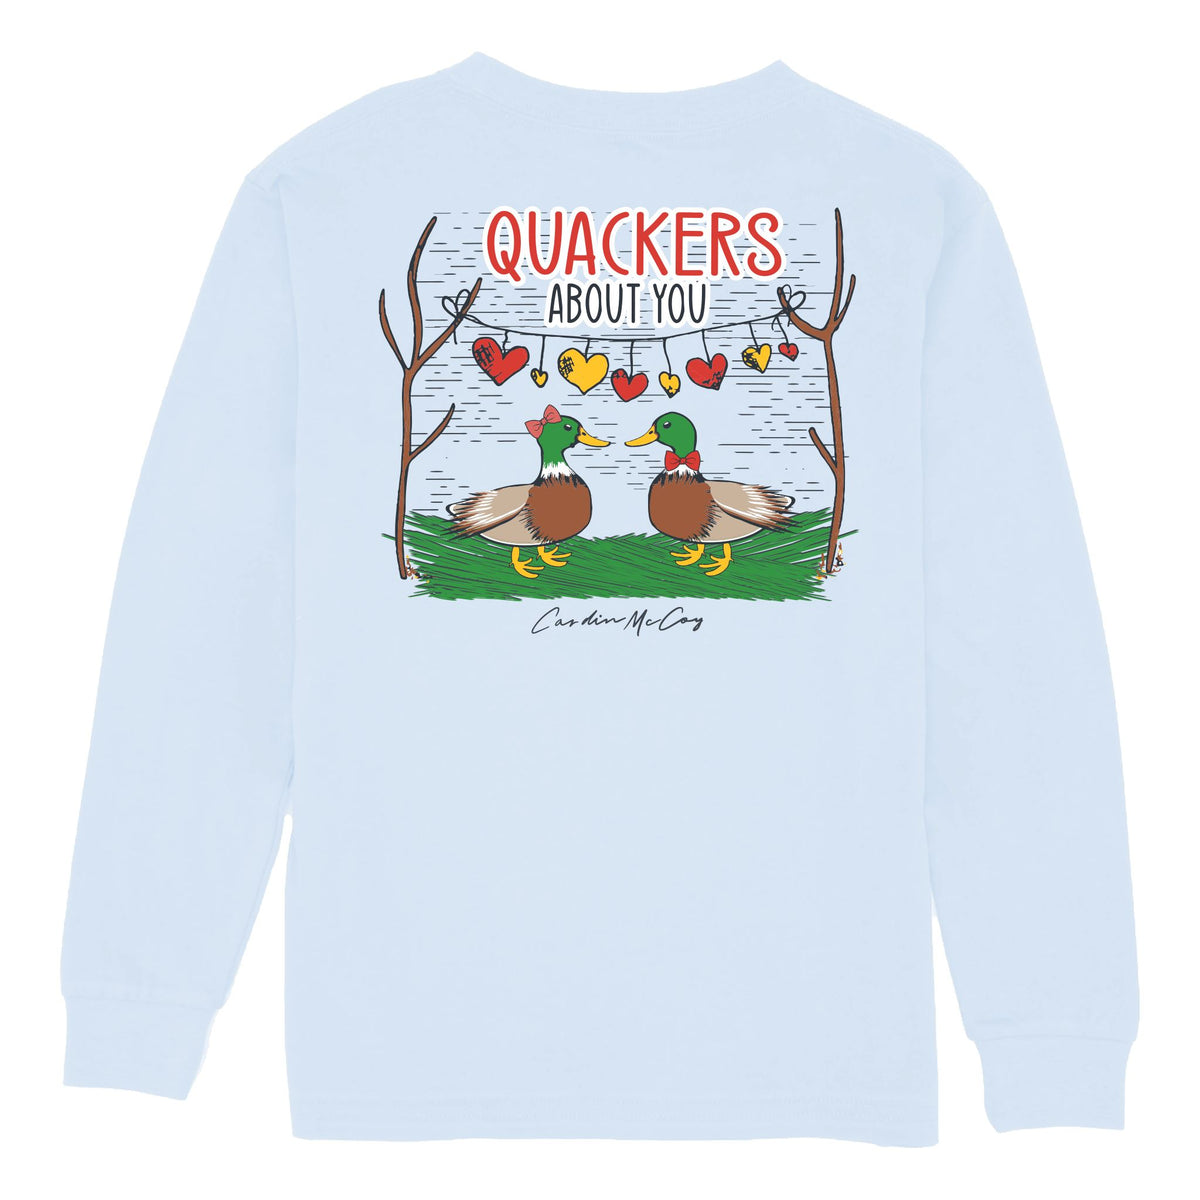 Kids' Quackers About You Long Sleeve Pocket Tee Long Sleeve T-Shirt Cardin McCoy Cool Blue XXS (2/3) 